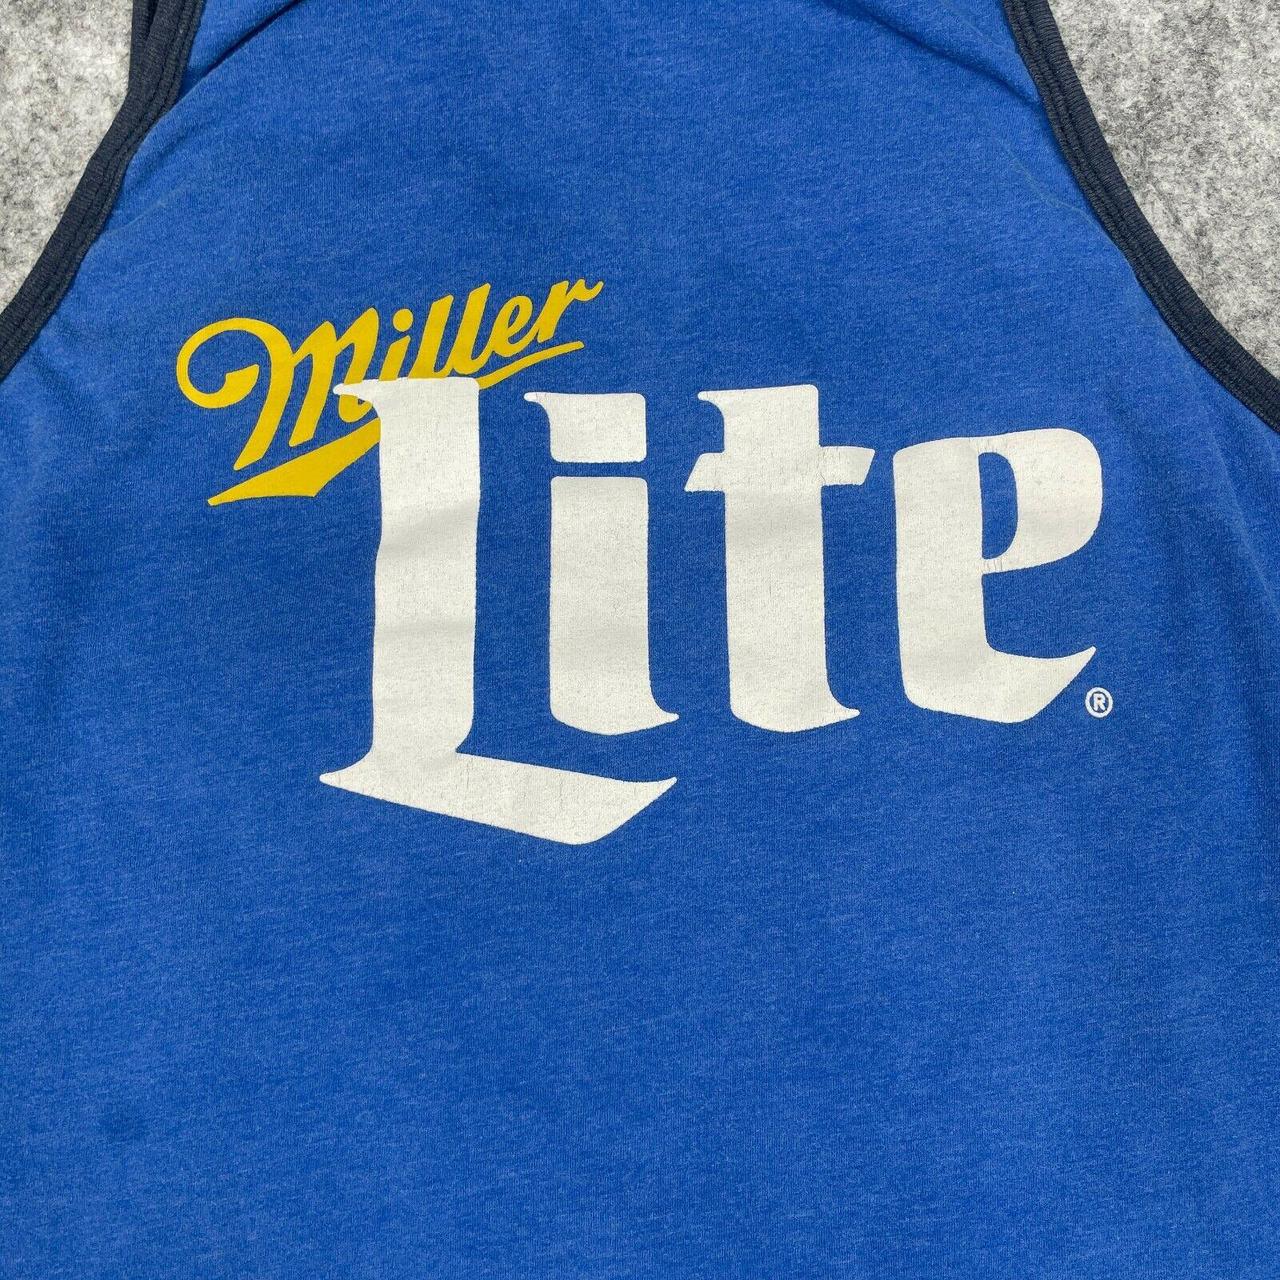 Product Image 2 - Miller Lite Shirt Mens XL